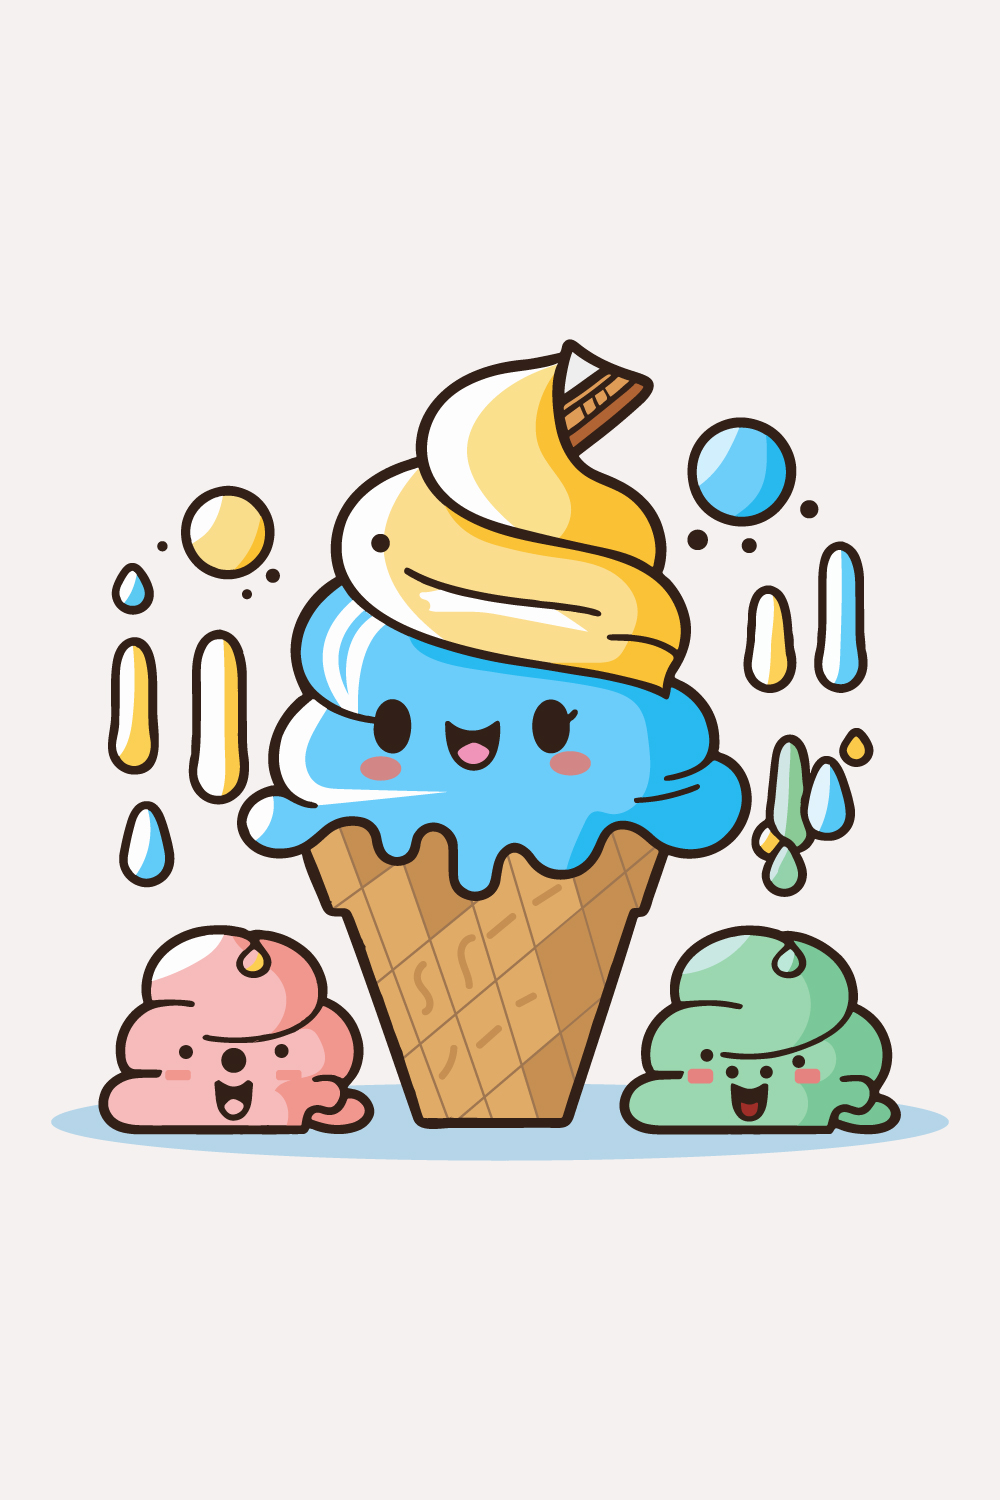 Cute Ice Cream Cartoon line art vector Icon illustration, Food drinks Flat Cartoon Concept Pro Vector, Ice Cream Cartoon, cone, cartoon ice cream, Cute Ice Cream logo pinterest preview image.